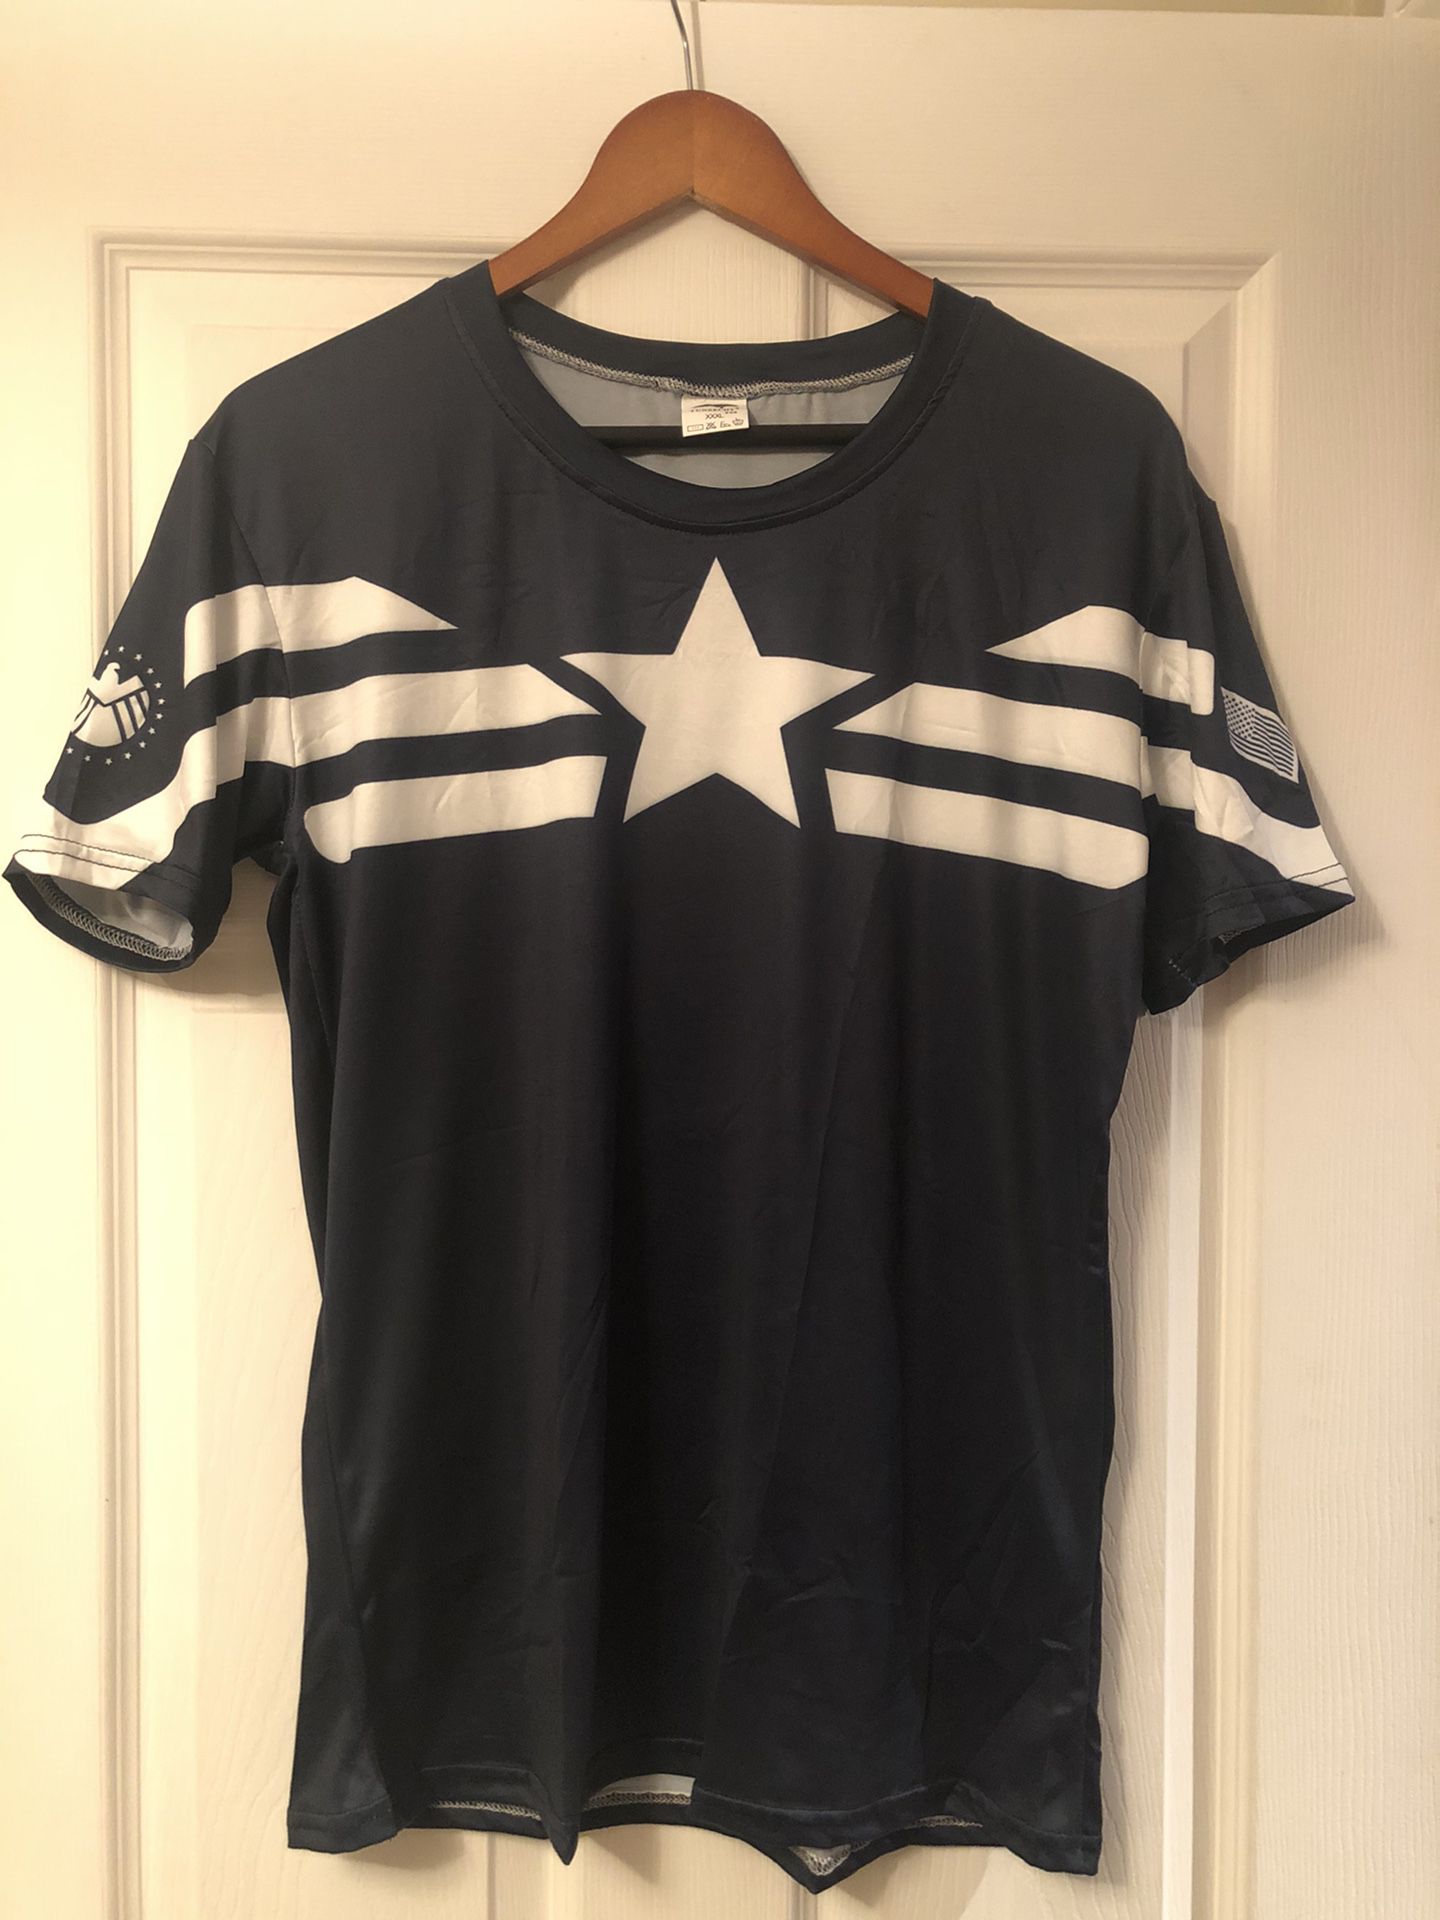 Super Hero Compression Shirt